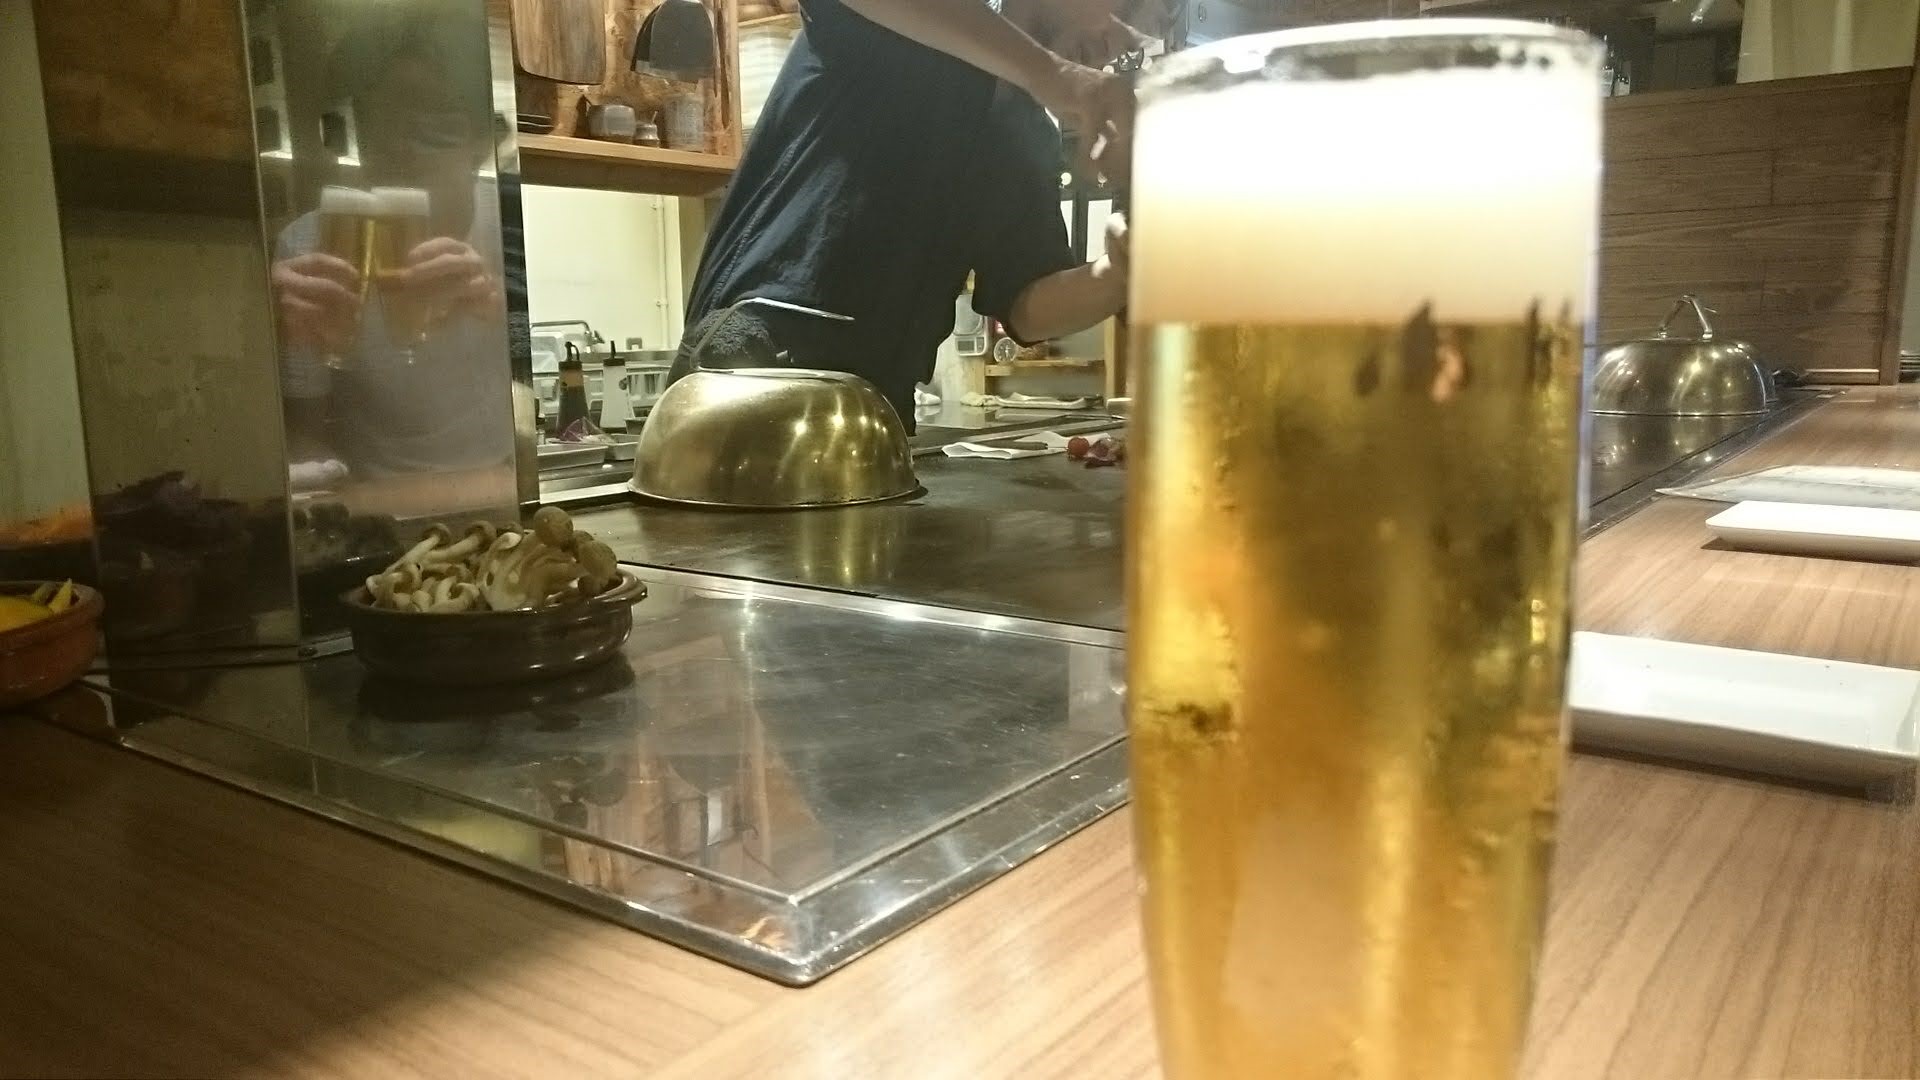 tomozoグラスビール